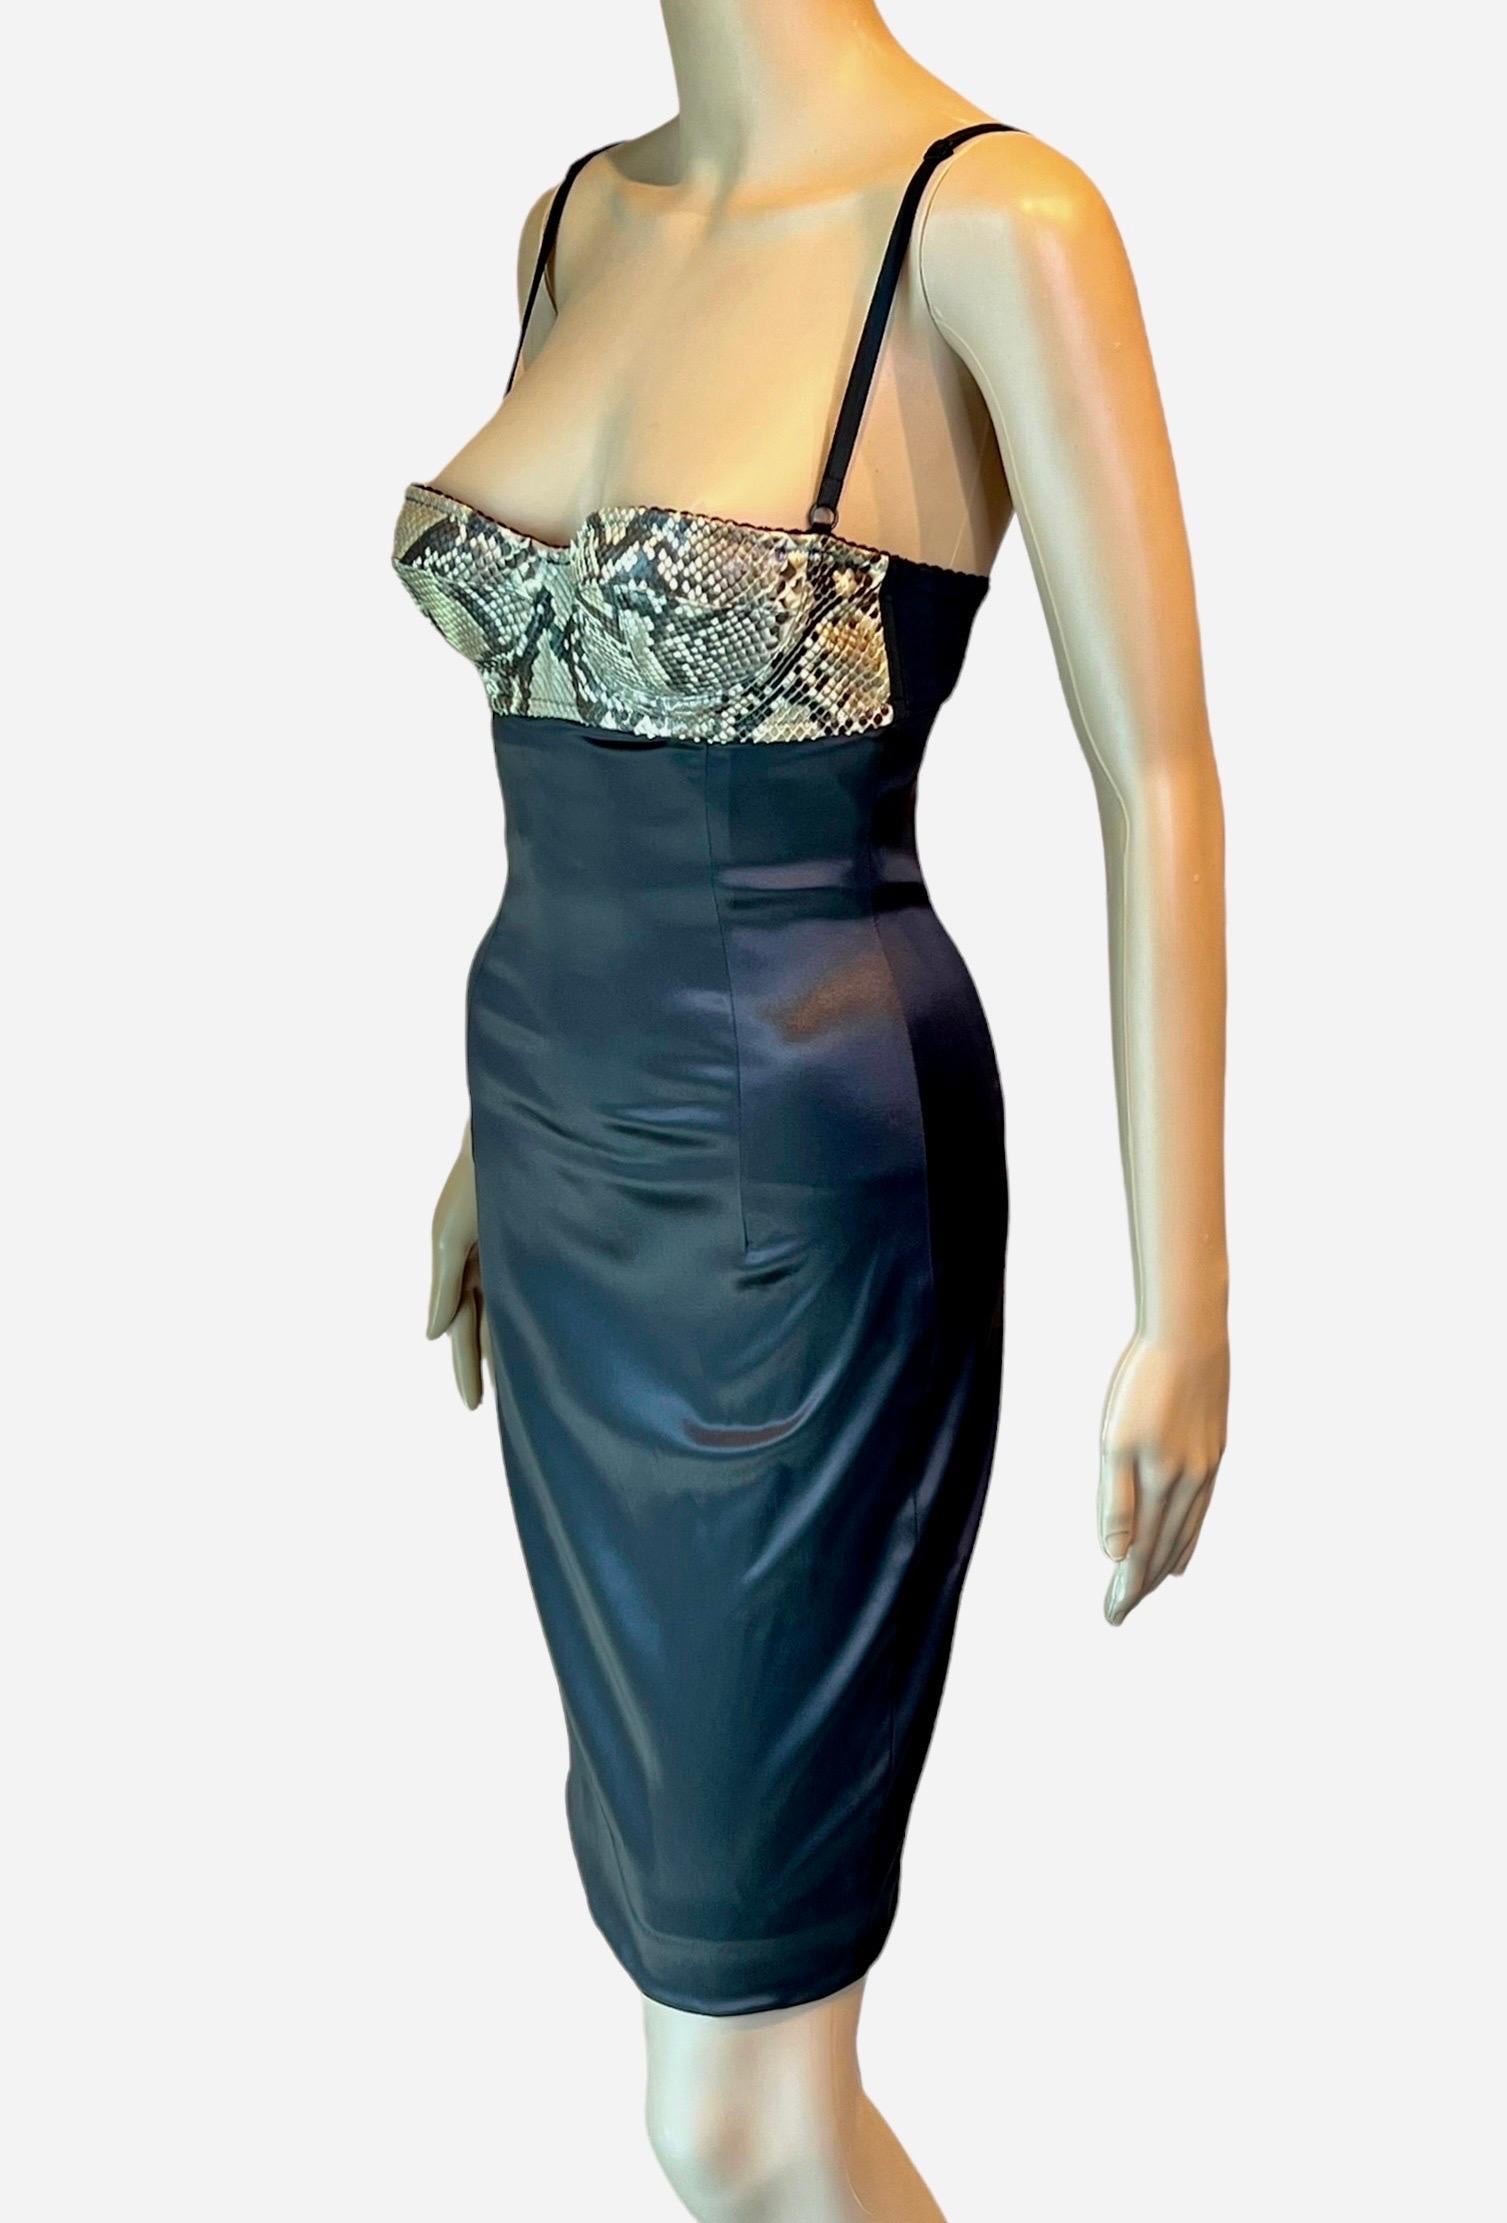 Dolce & Gabbana S/S 2005 Python Leather Bustier Bra Bodycon Silk Mini Dress In Good Condition In Naples, FL